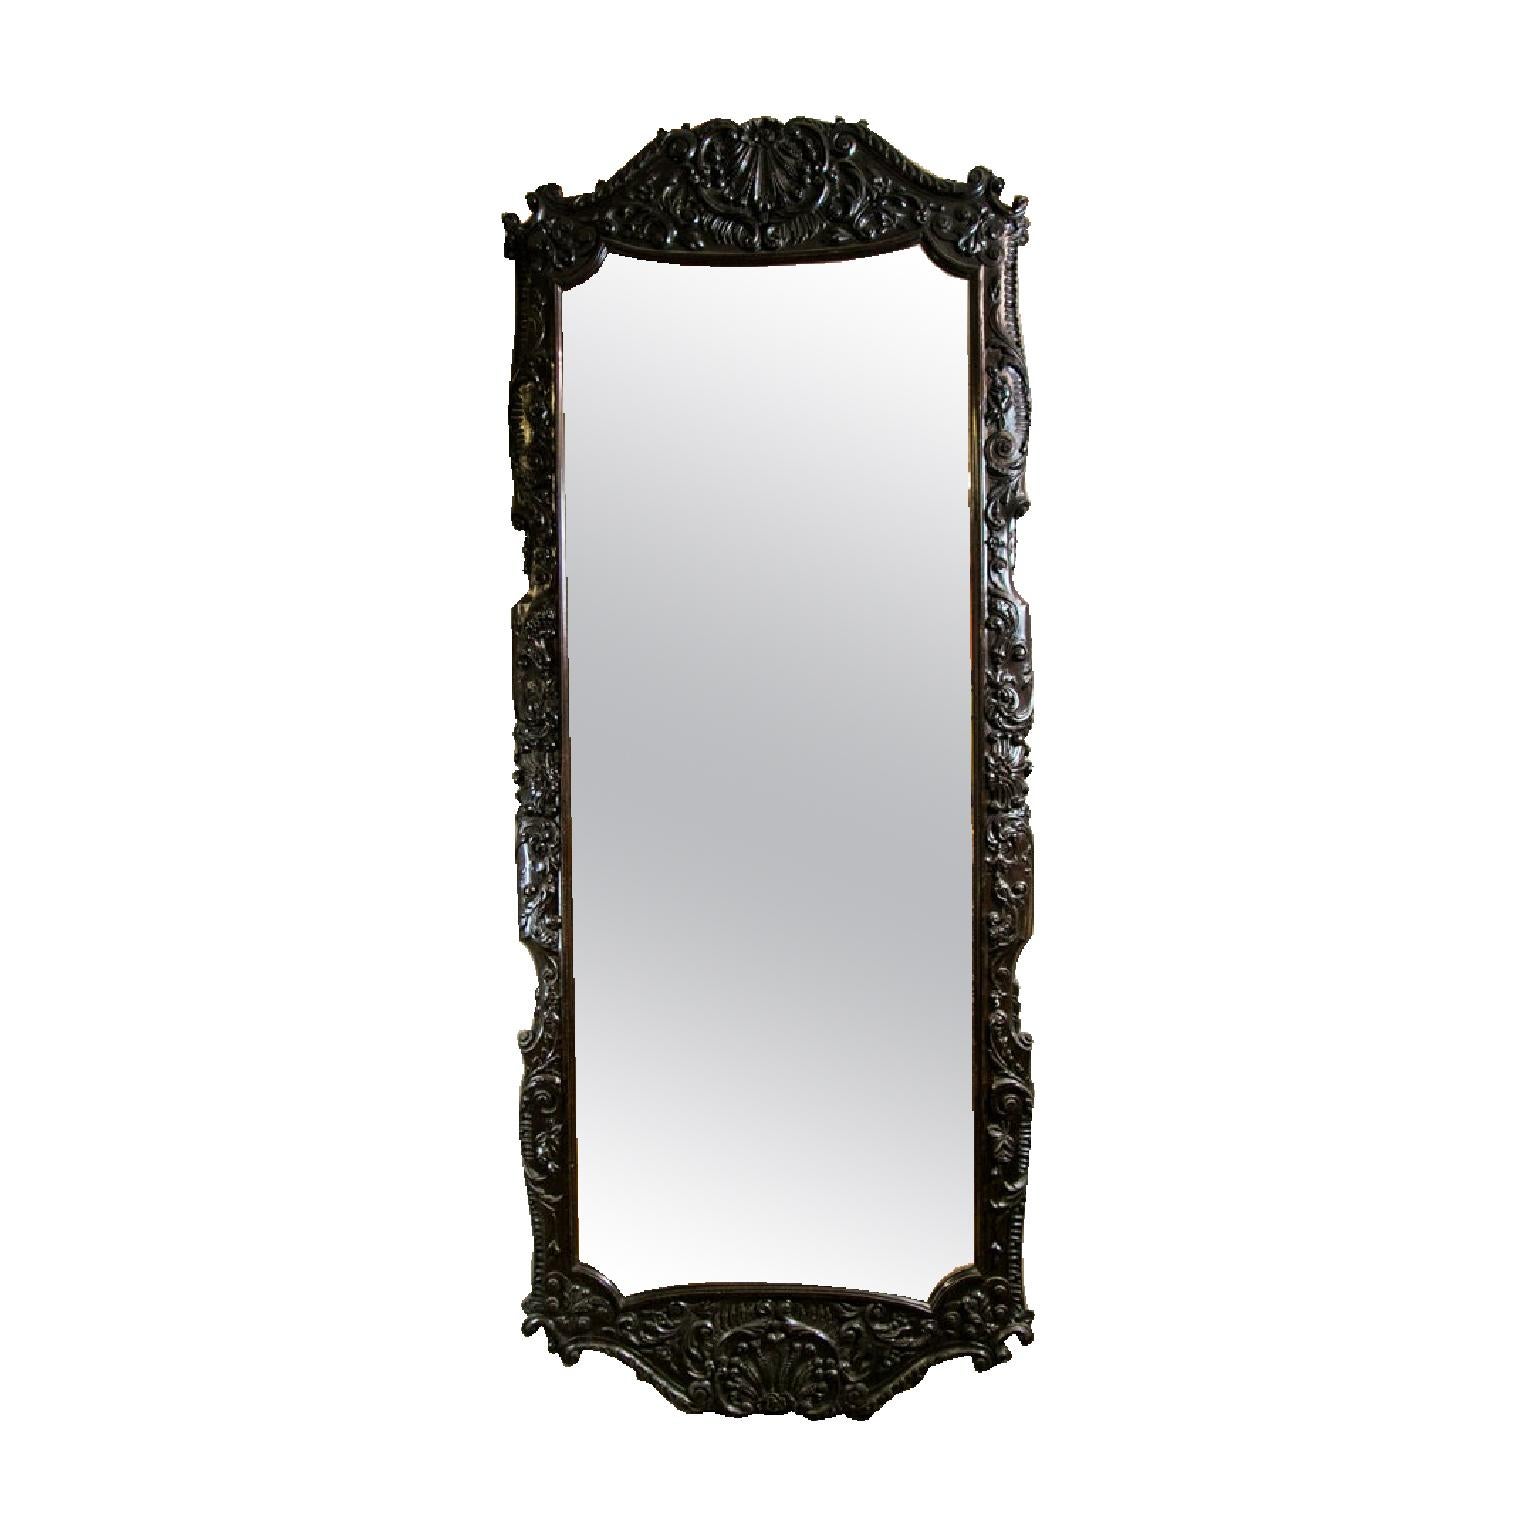 English Large Carved Beveled Mirror